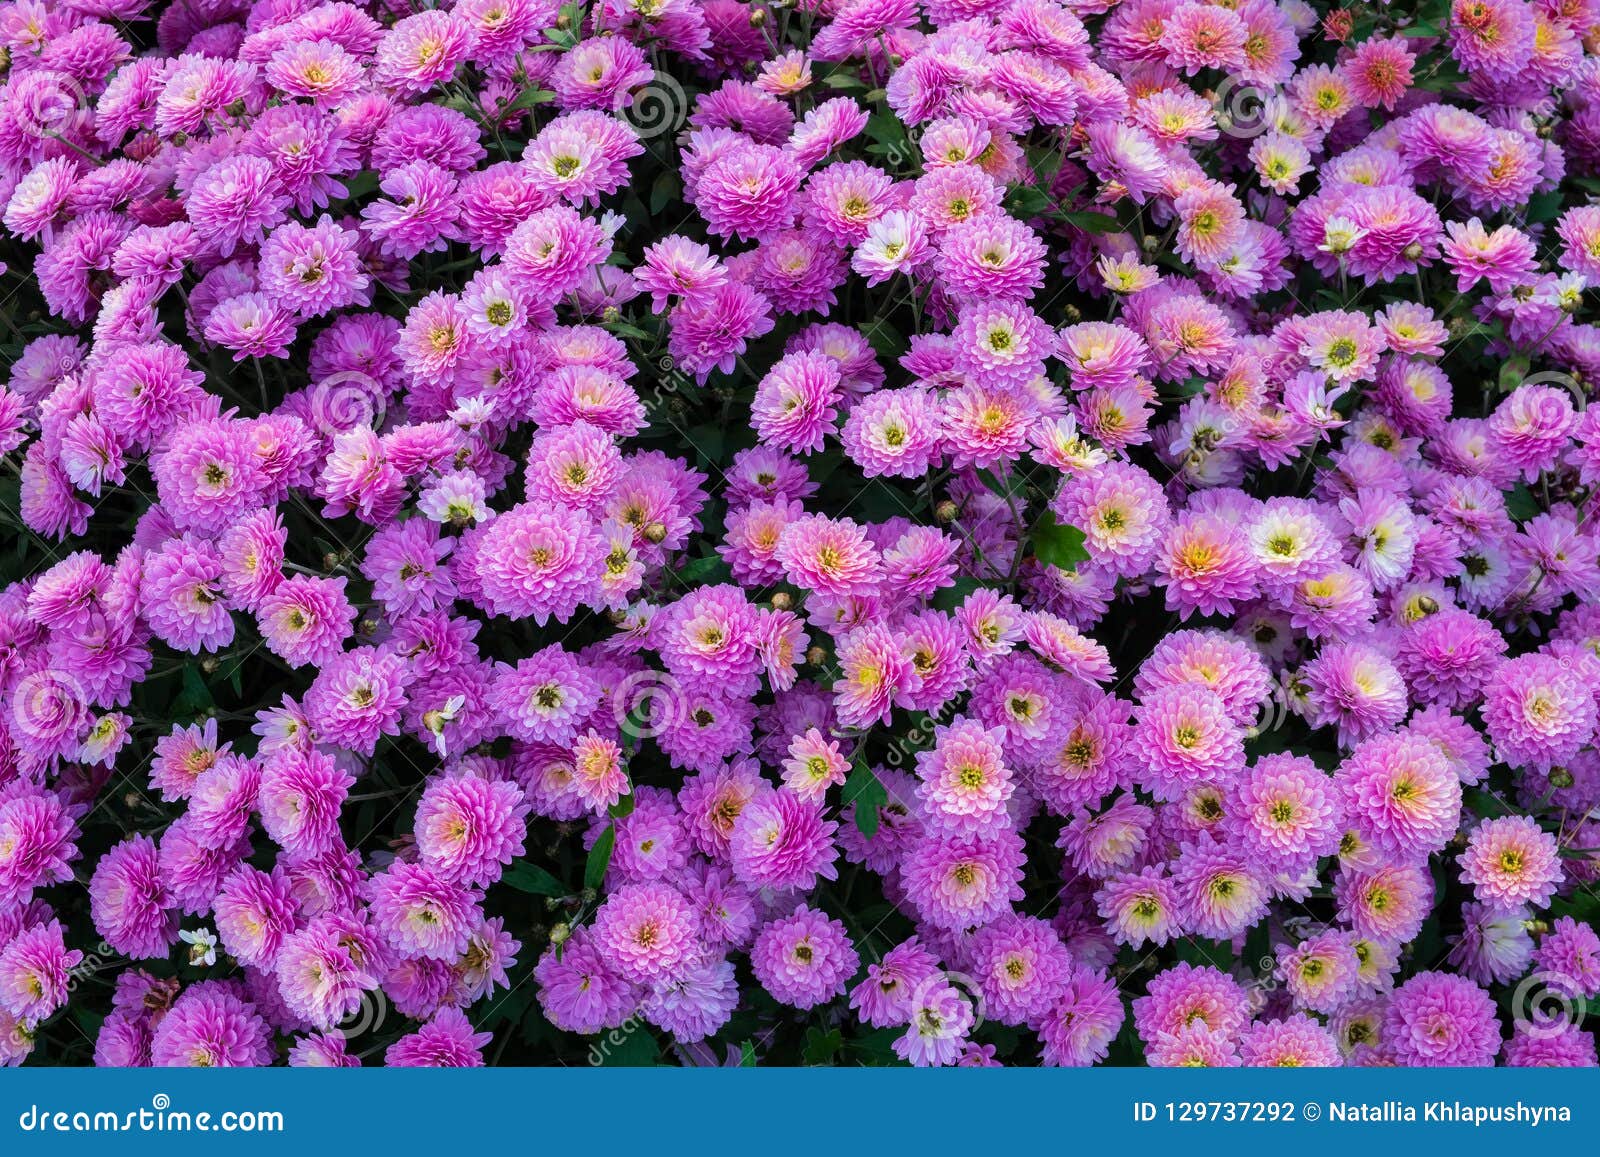 Background of Purple Chrysanthemum Flowers. Stock Photo - Image of ...